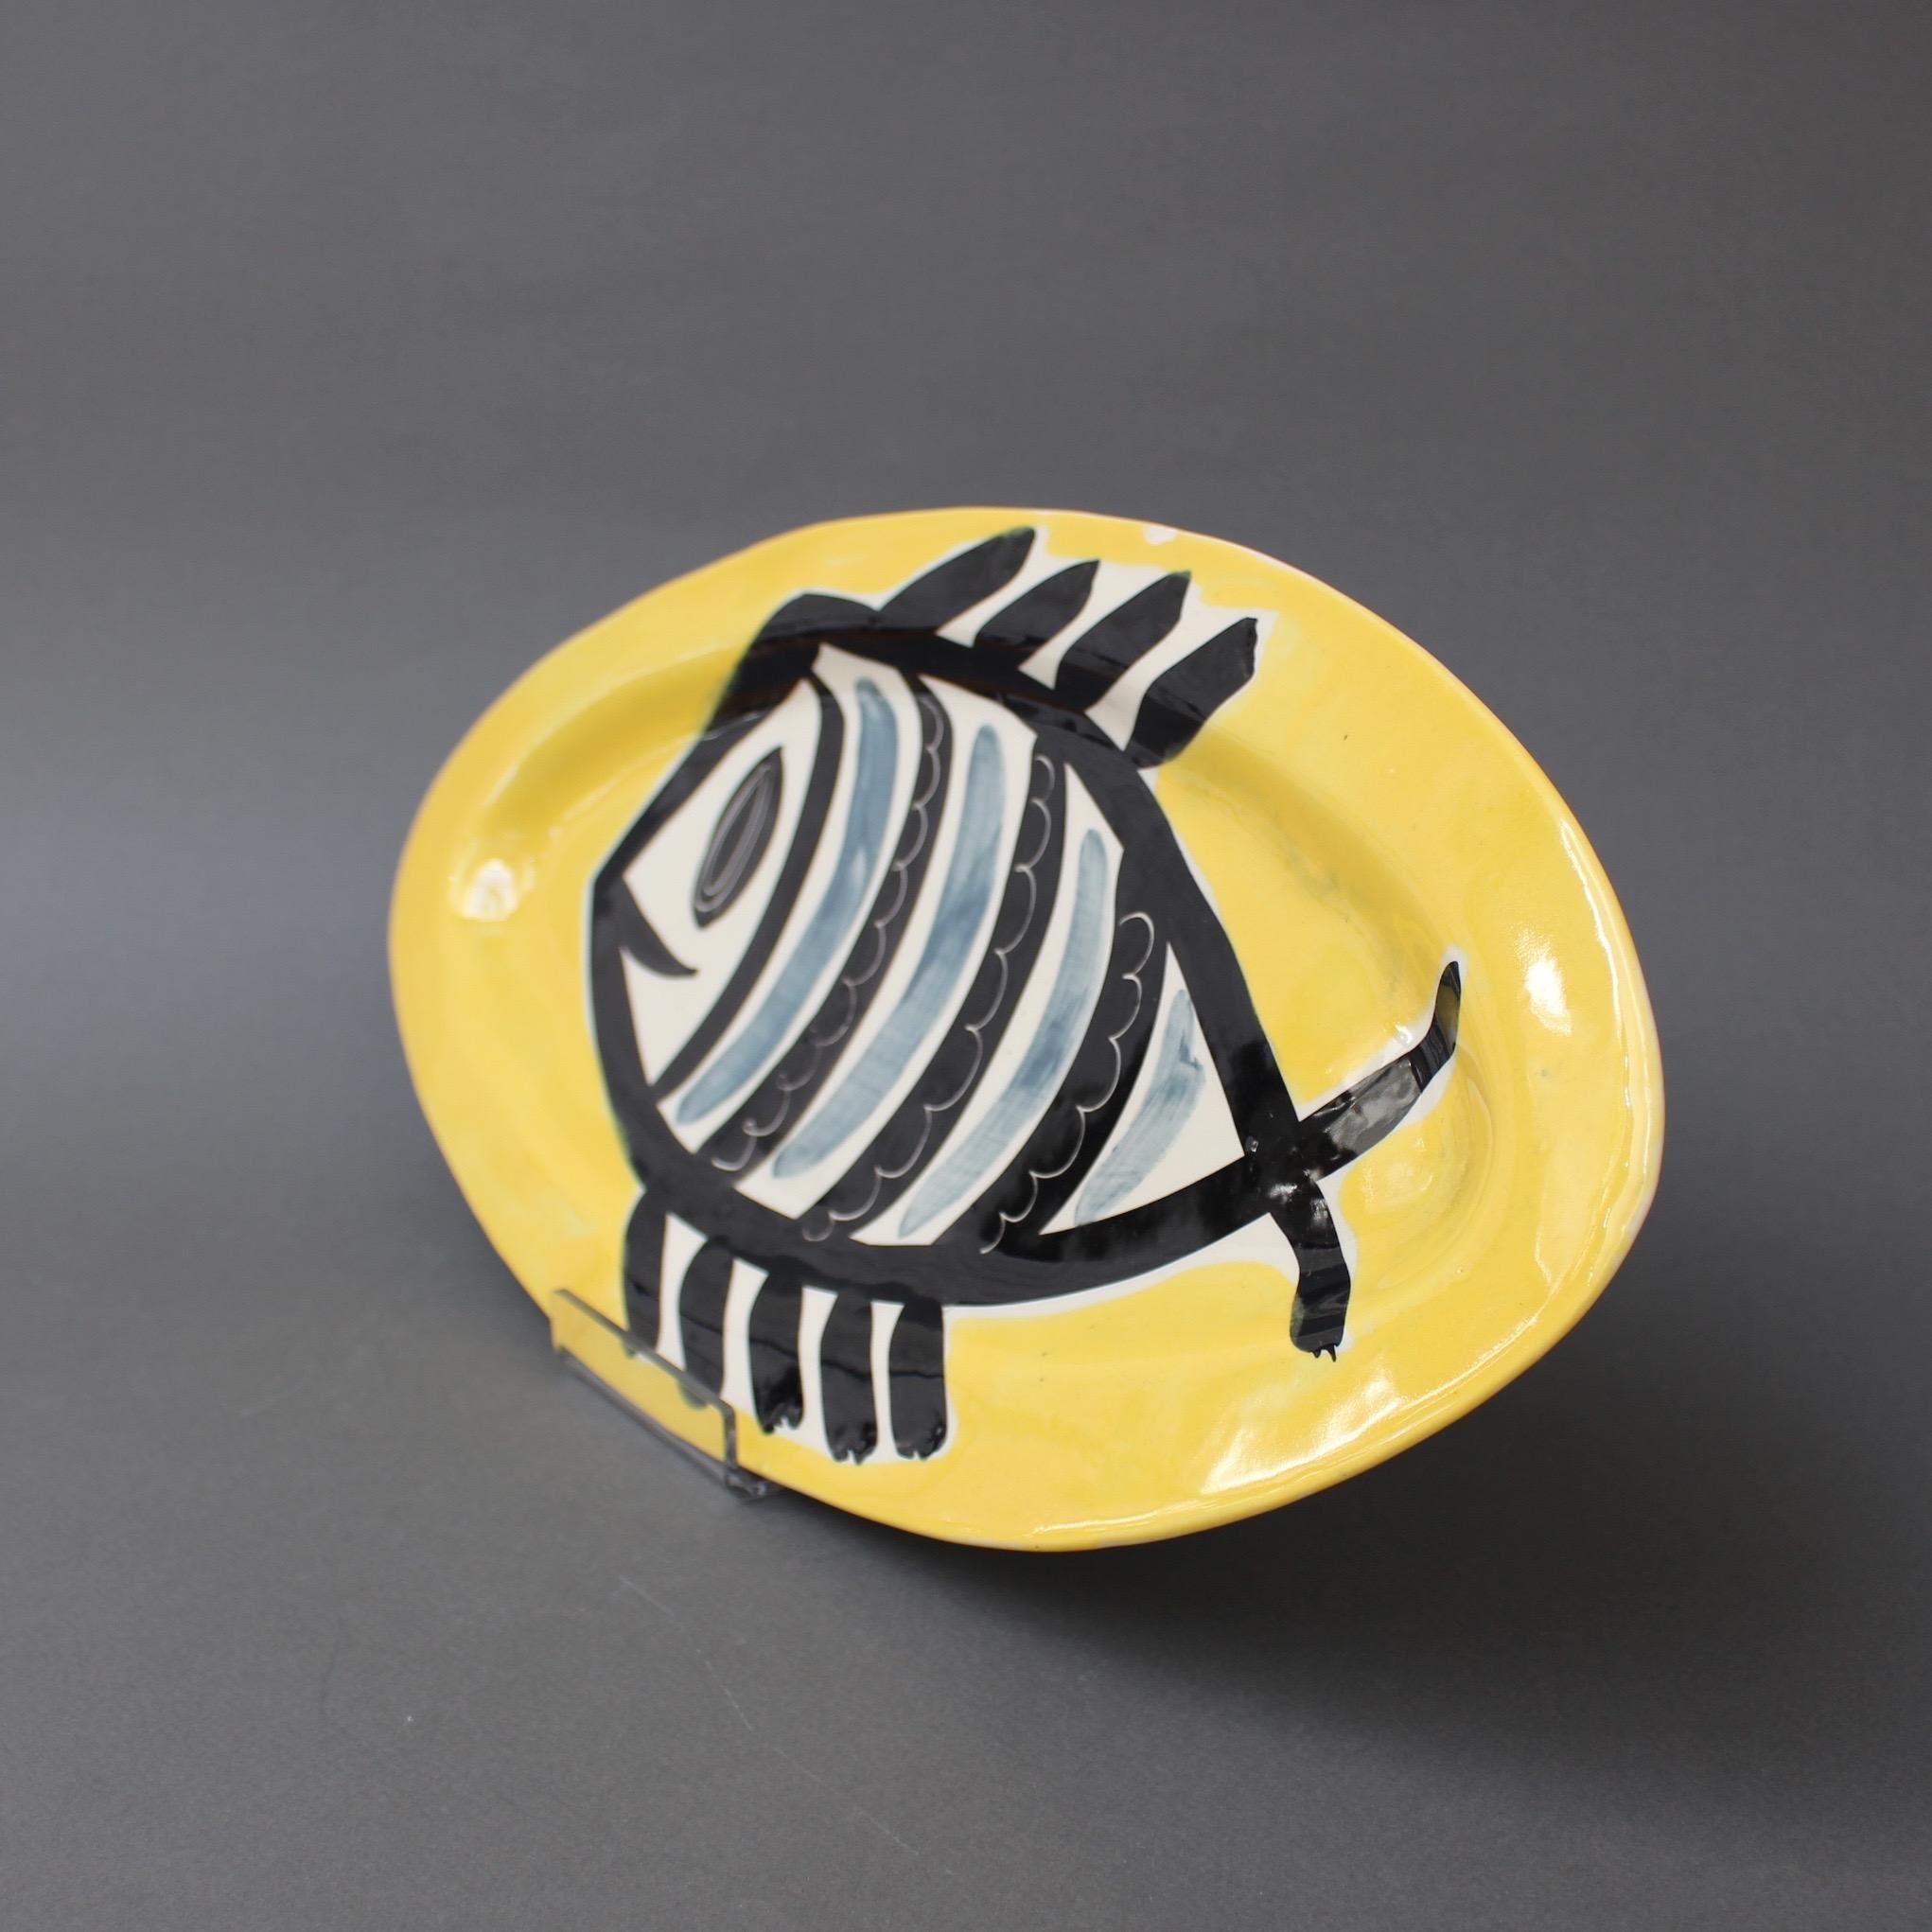 Hand-Painted Ceramic Decorative Platter with Fish Motif by Jacques Pouchain, Poët-Laval